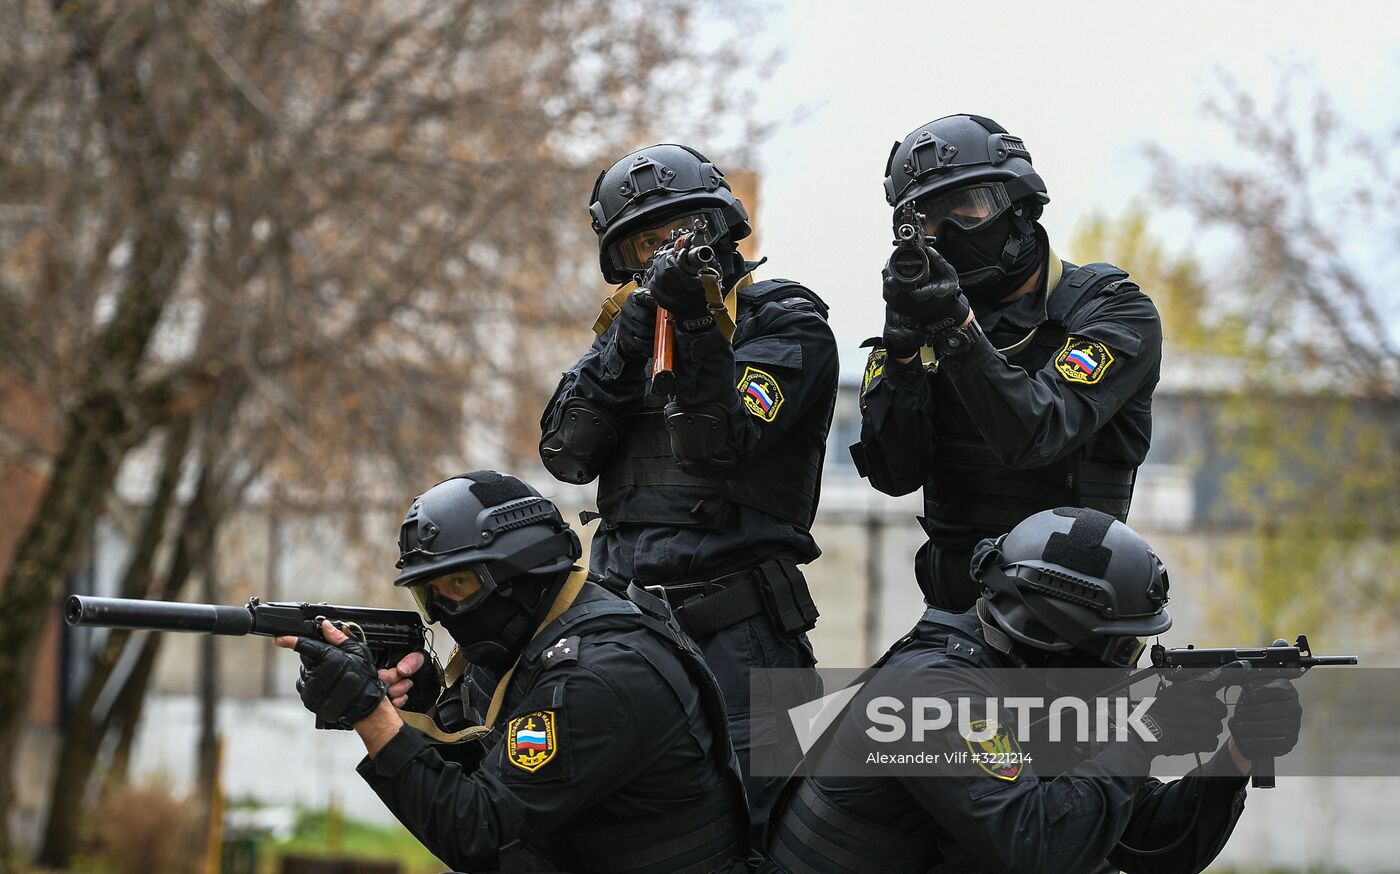 K-9 Anti-Terror Security Russian Championships final